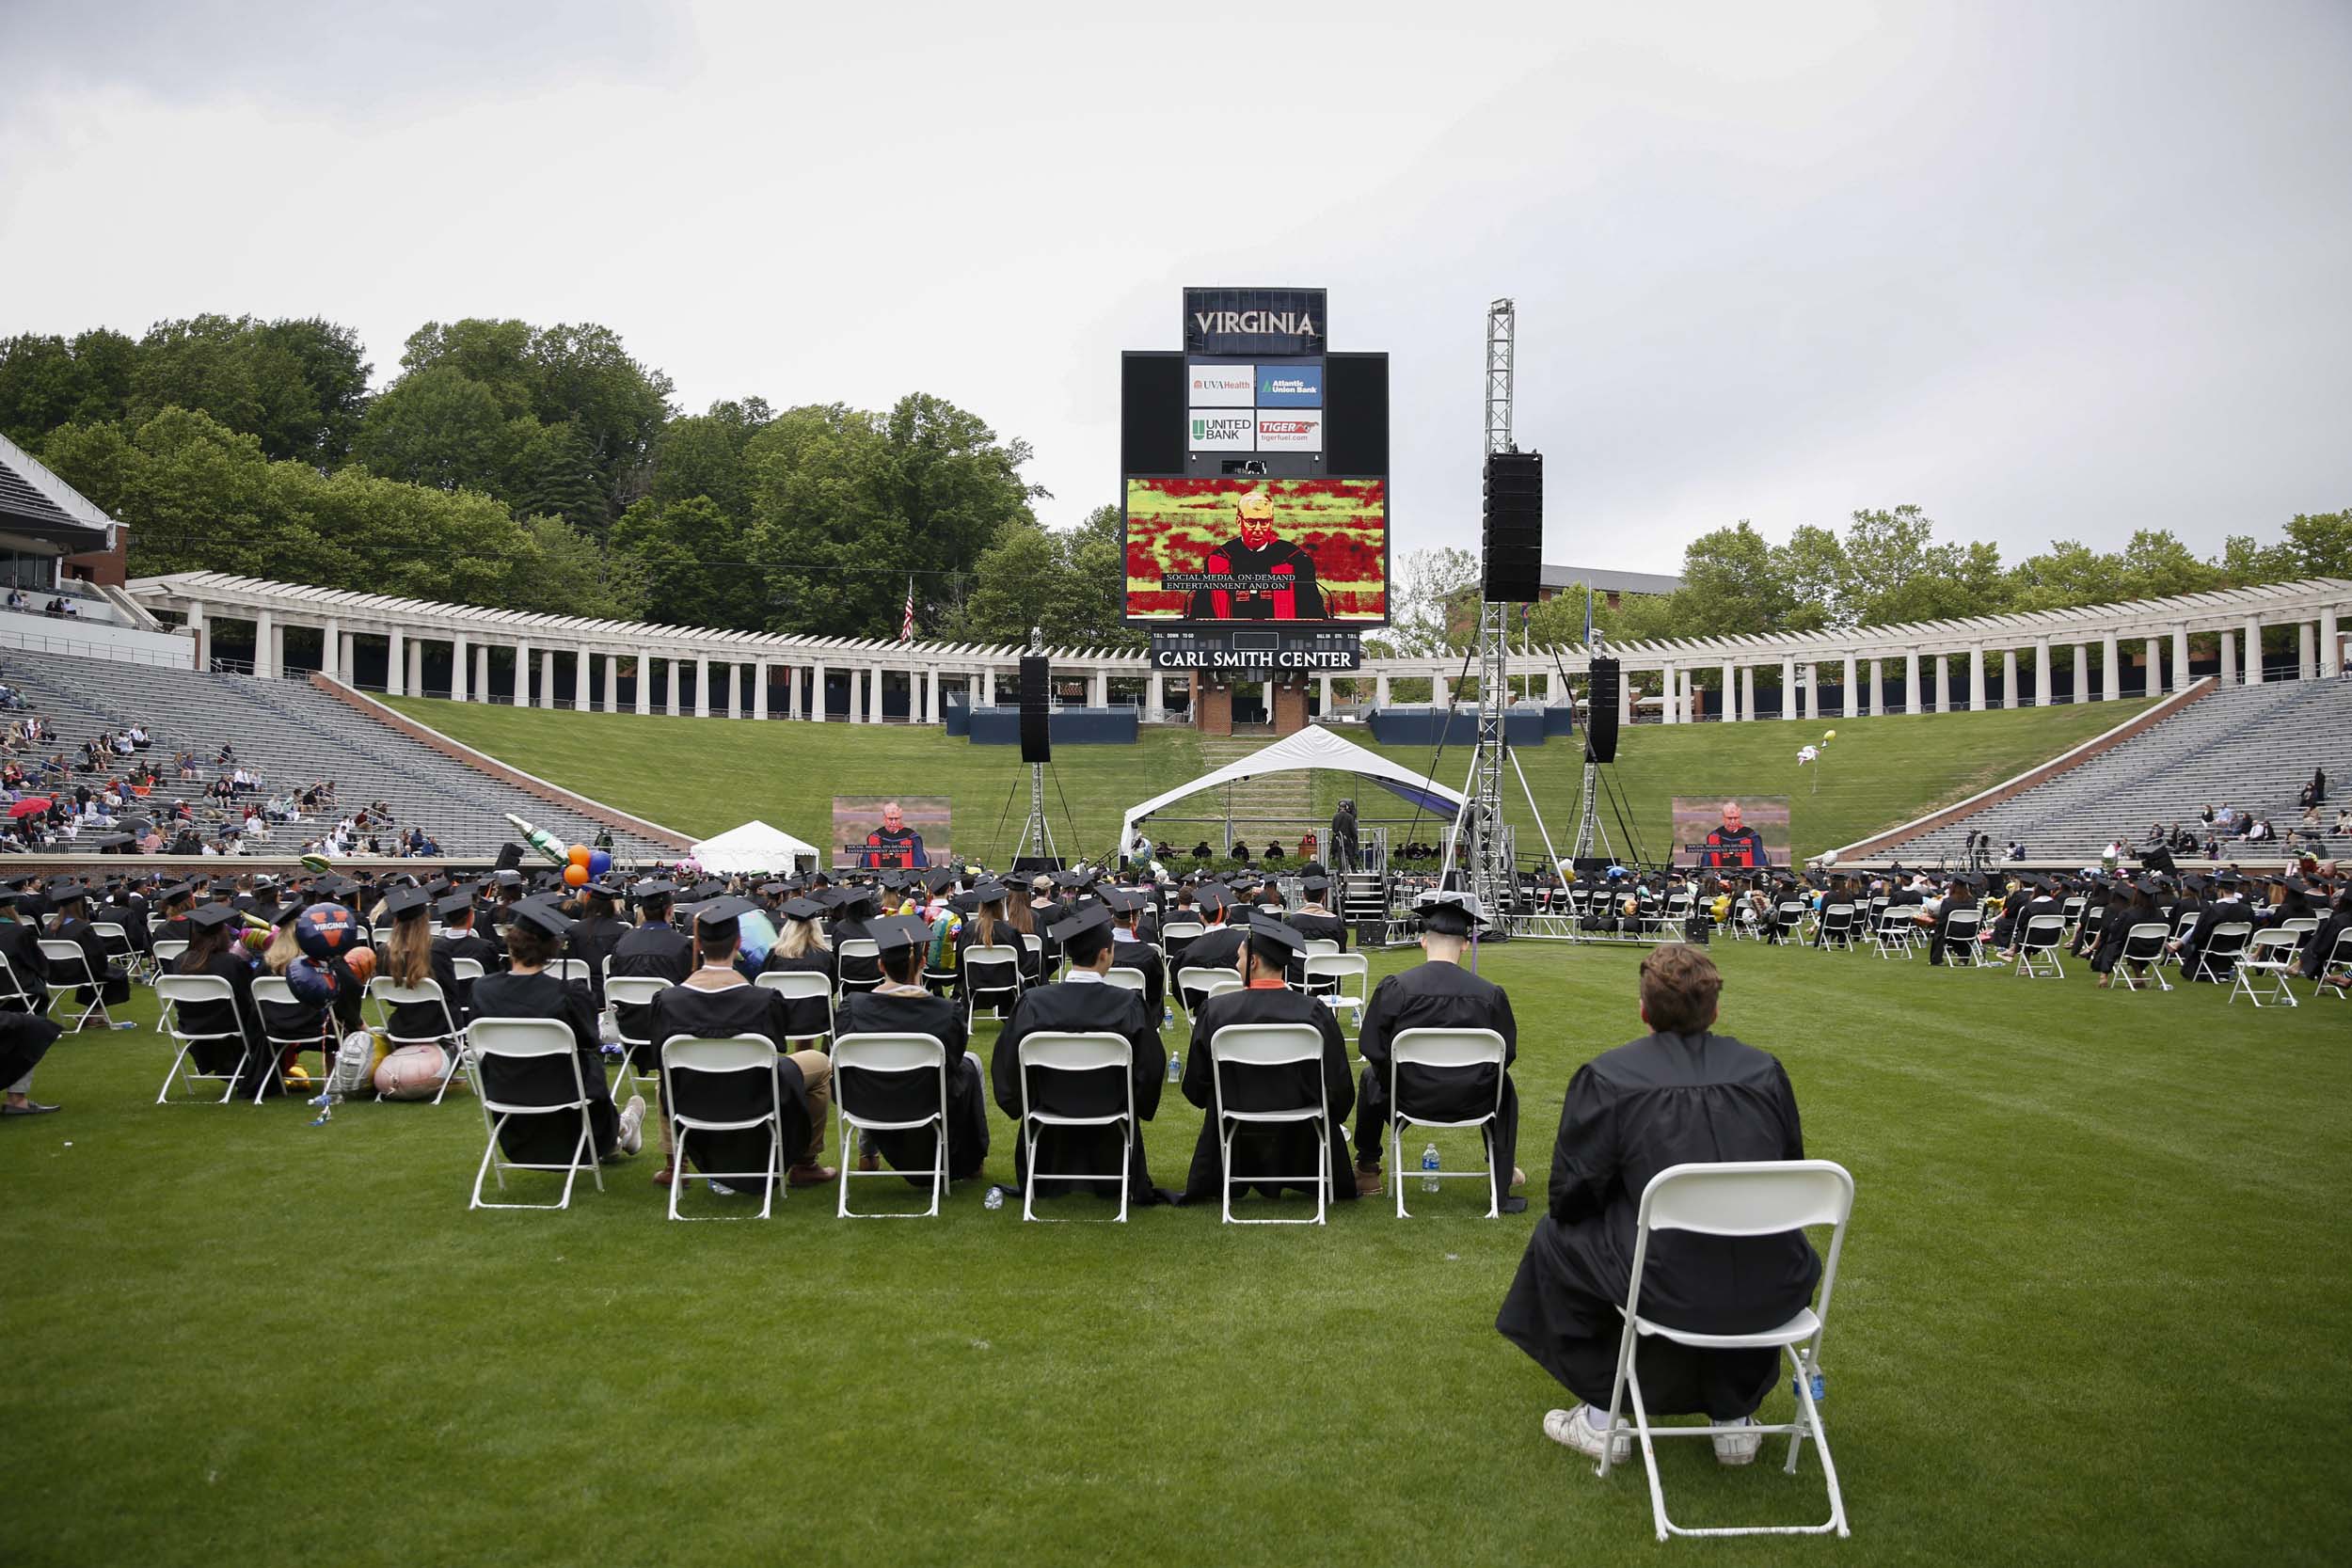 Graduates watching big screen has speaker is shown on the screen